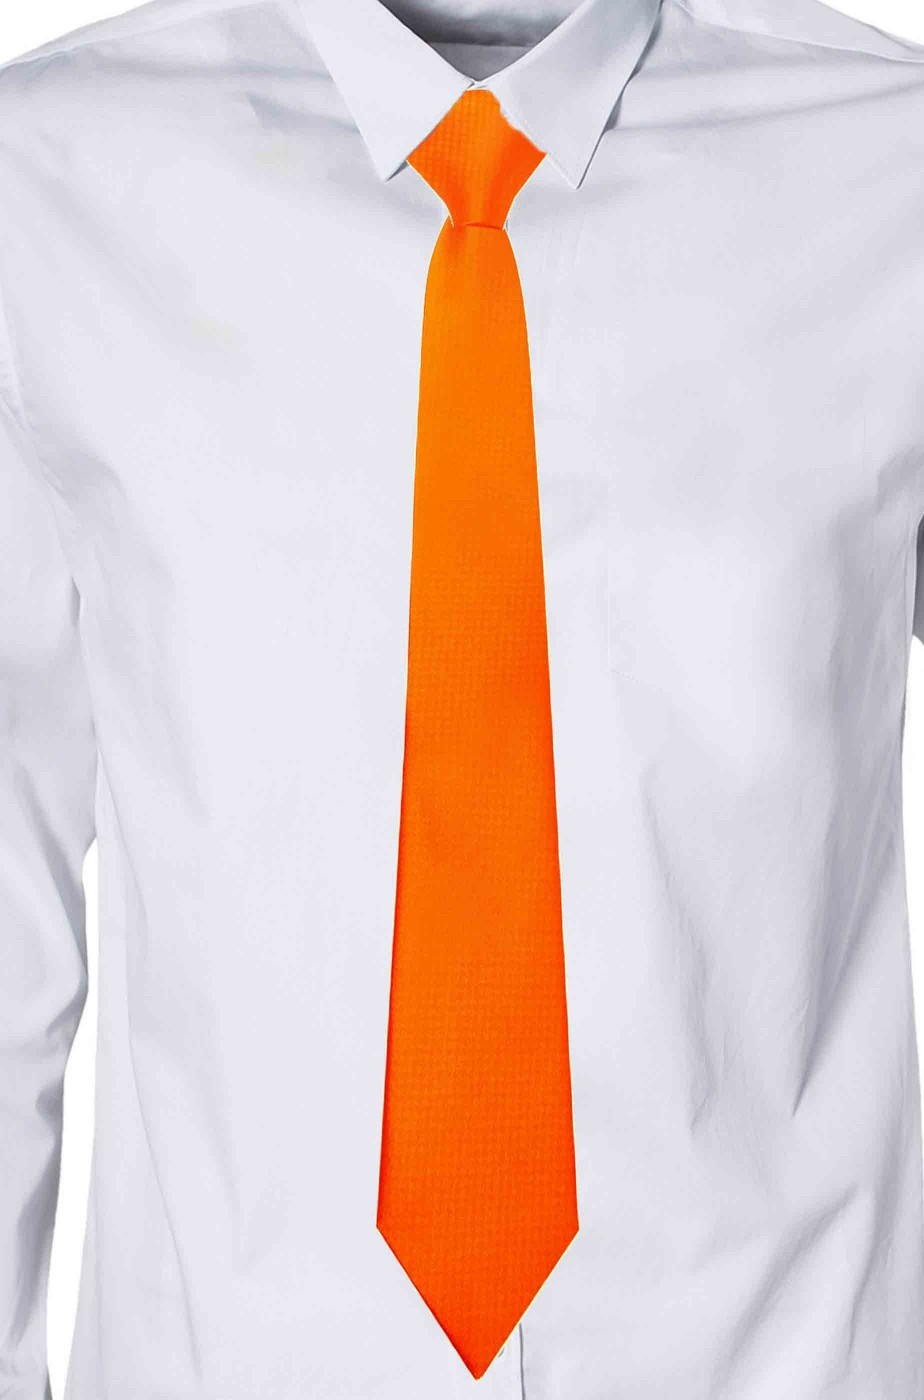 Cravatta arancione elegante larghezza media